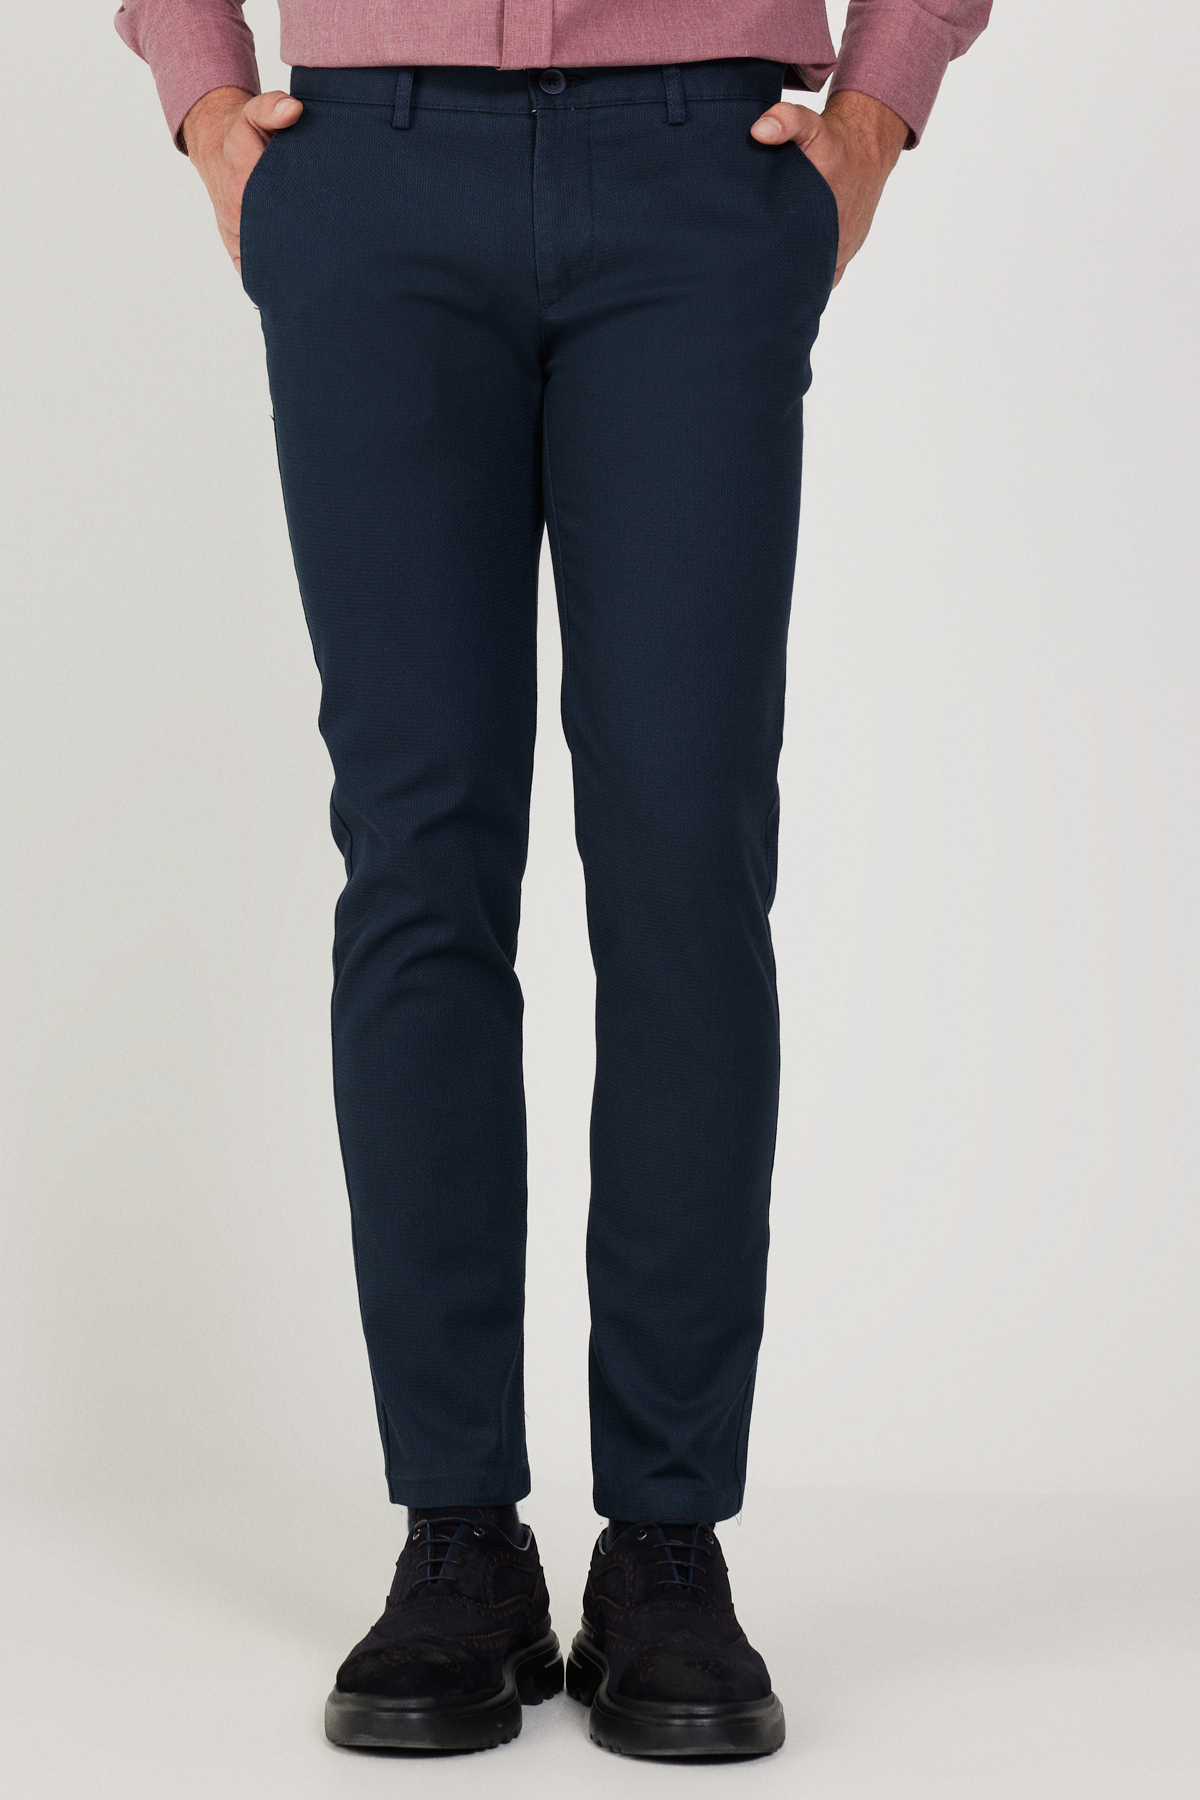 ALTINYILDIZ CLASSICS Men's Navy Blue Slim Fit Slim Fit Cotton Flexible Comfort Dobby Trousers